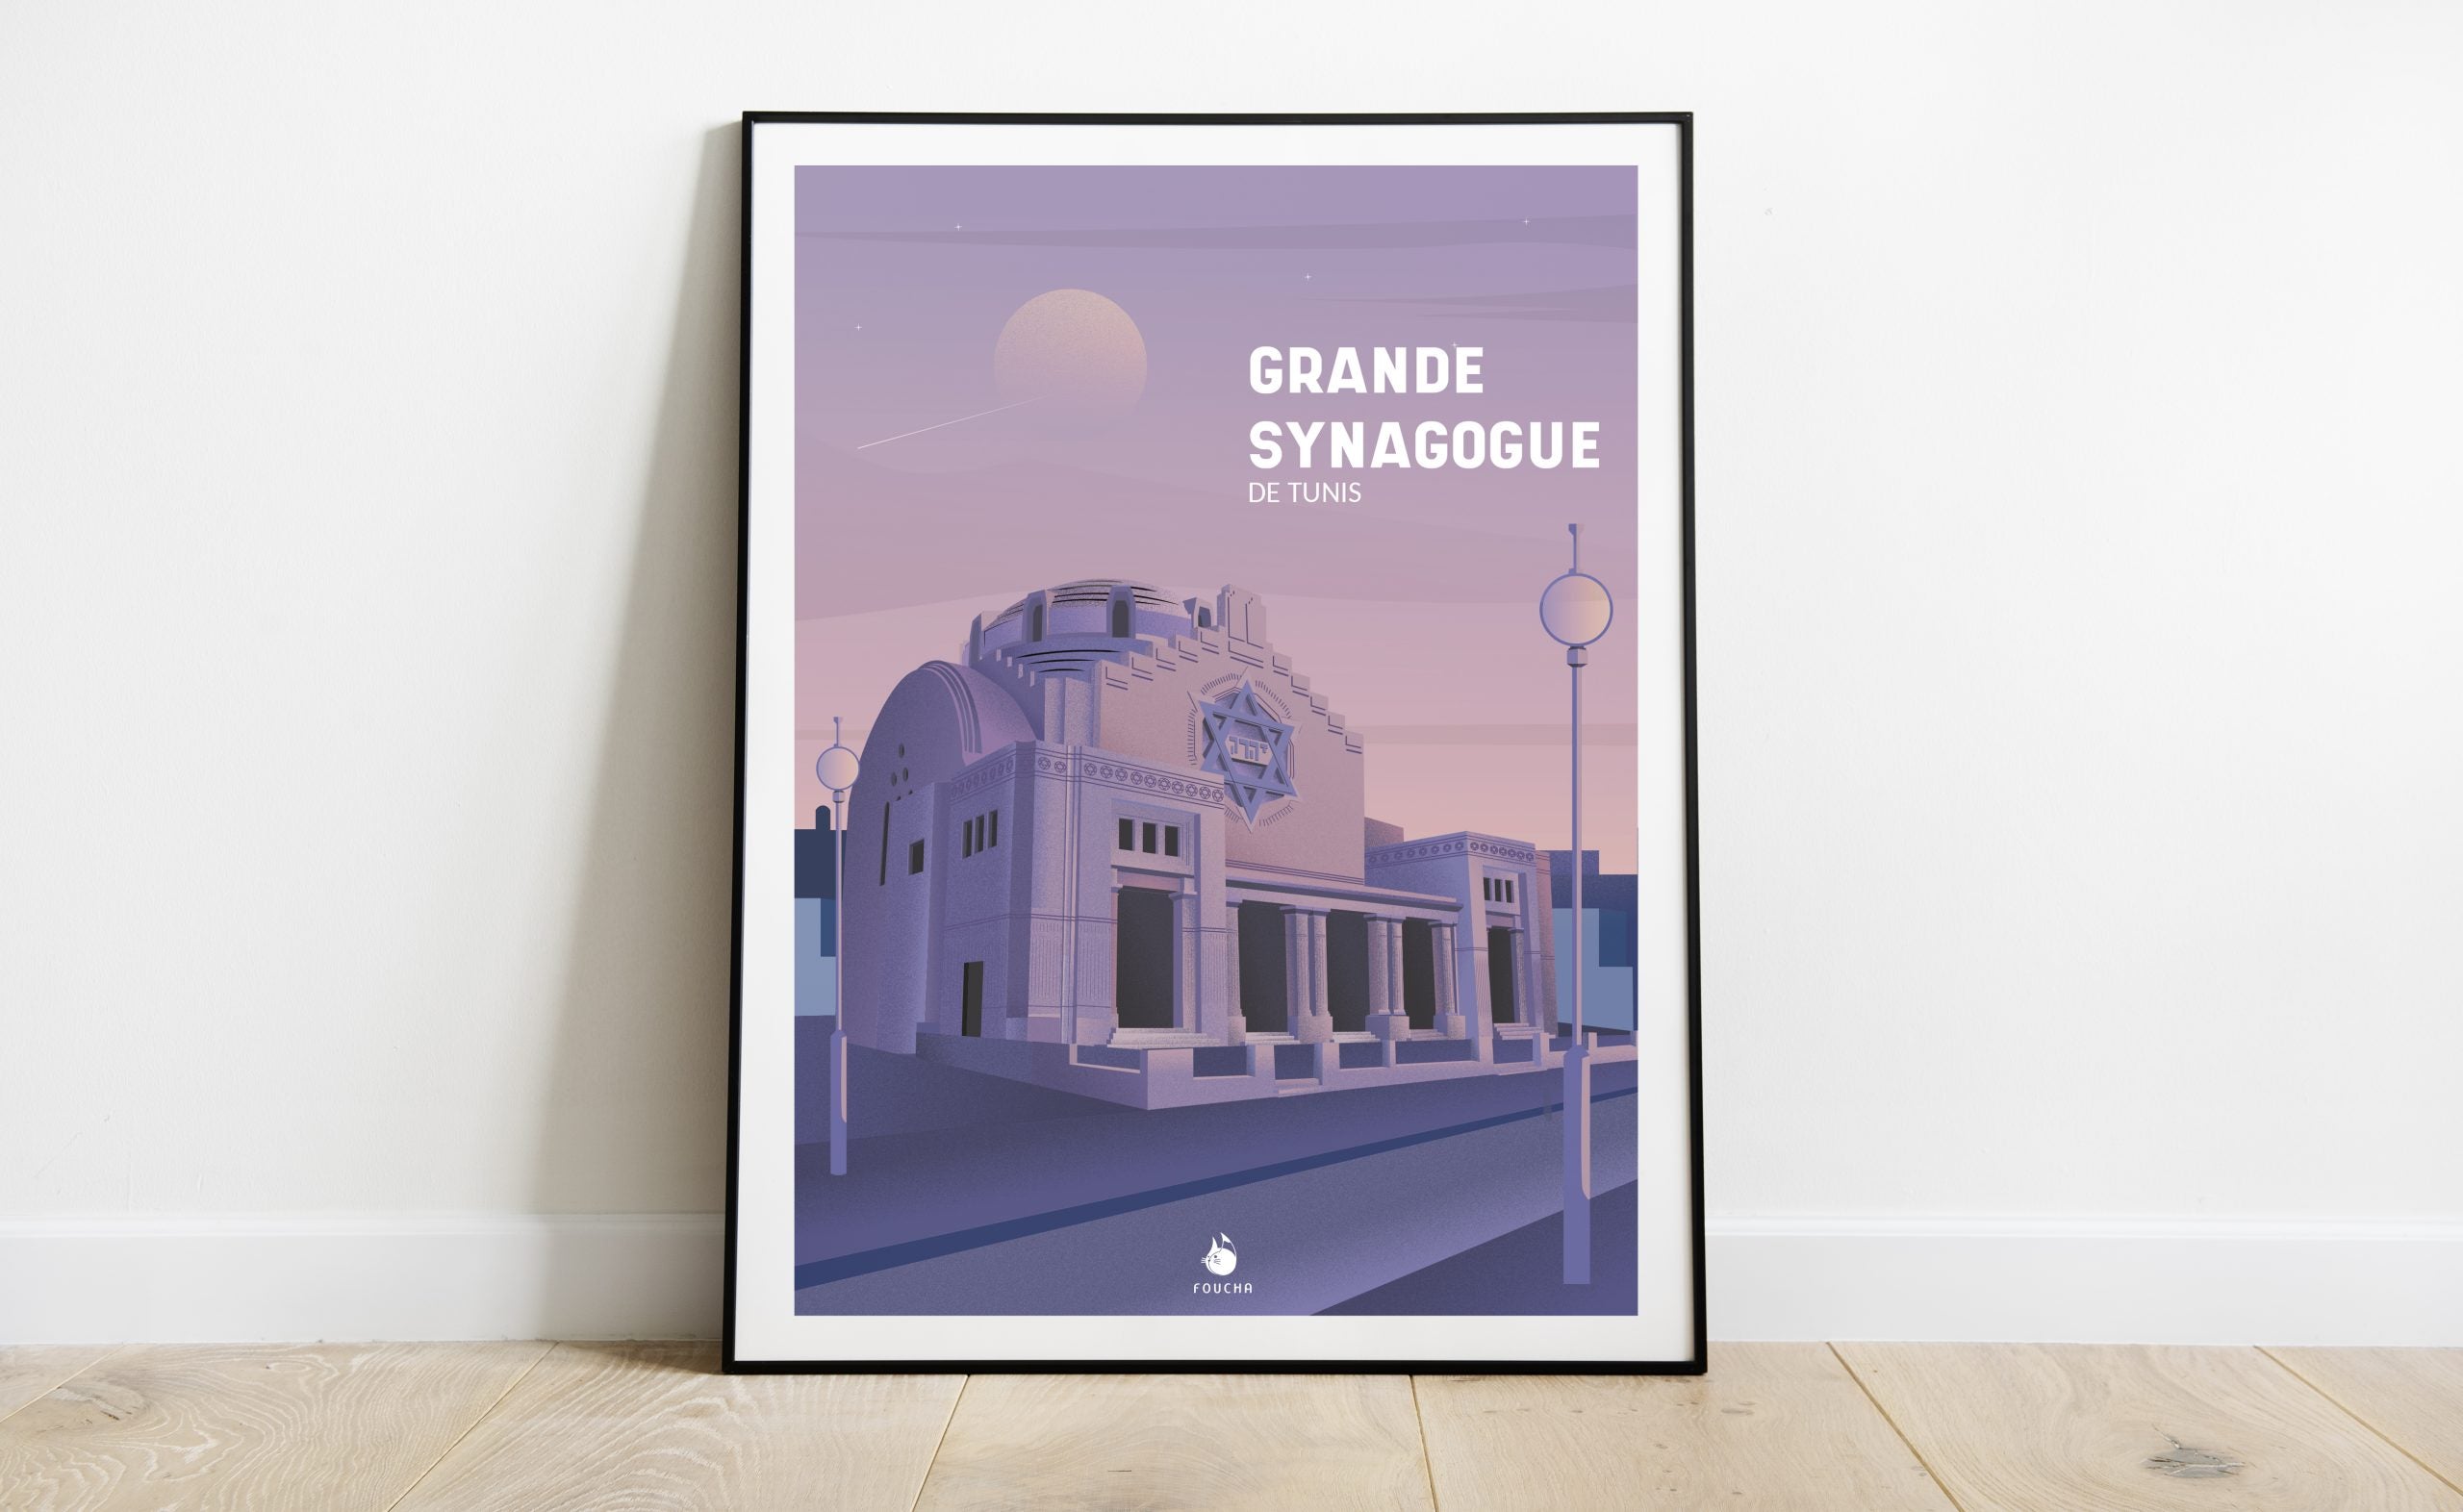 Poster Lieux Célèbres En Tunisie "Grande Synagogue de Tunis"